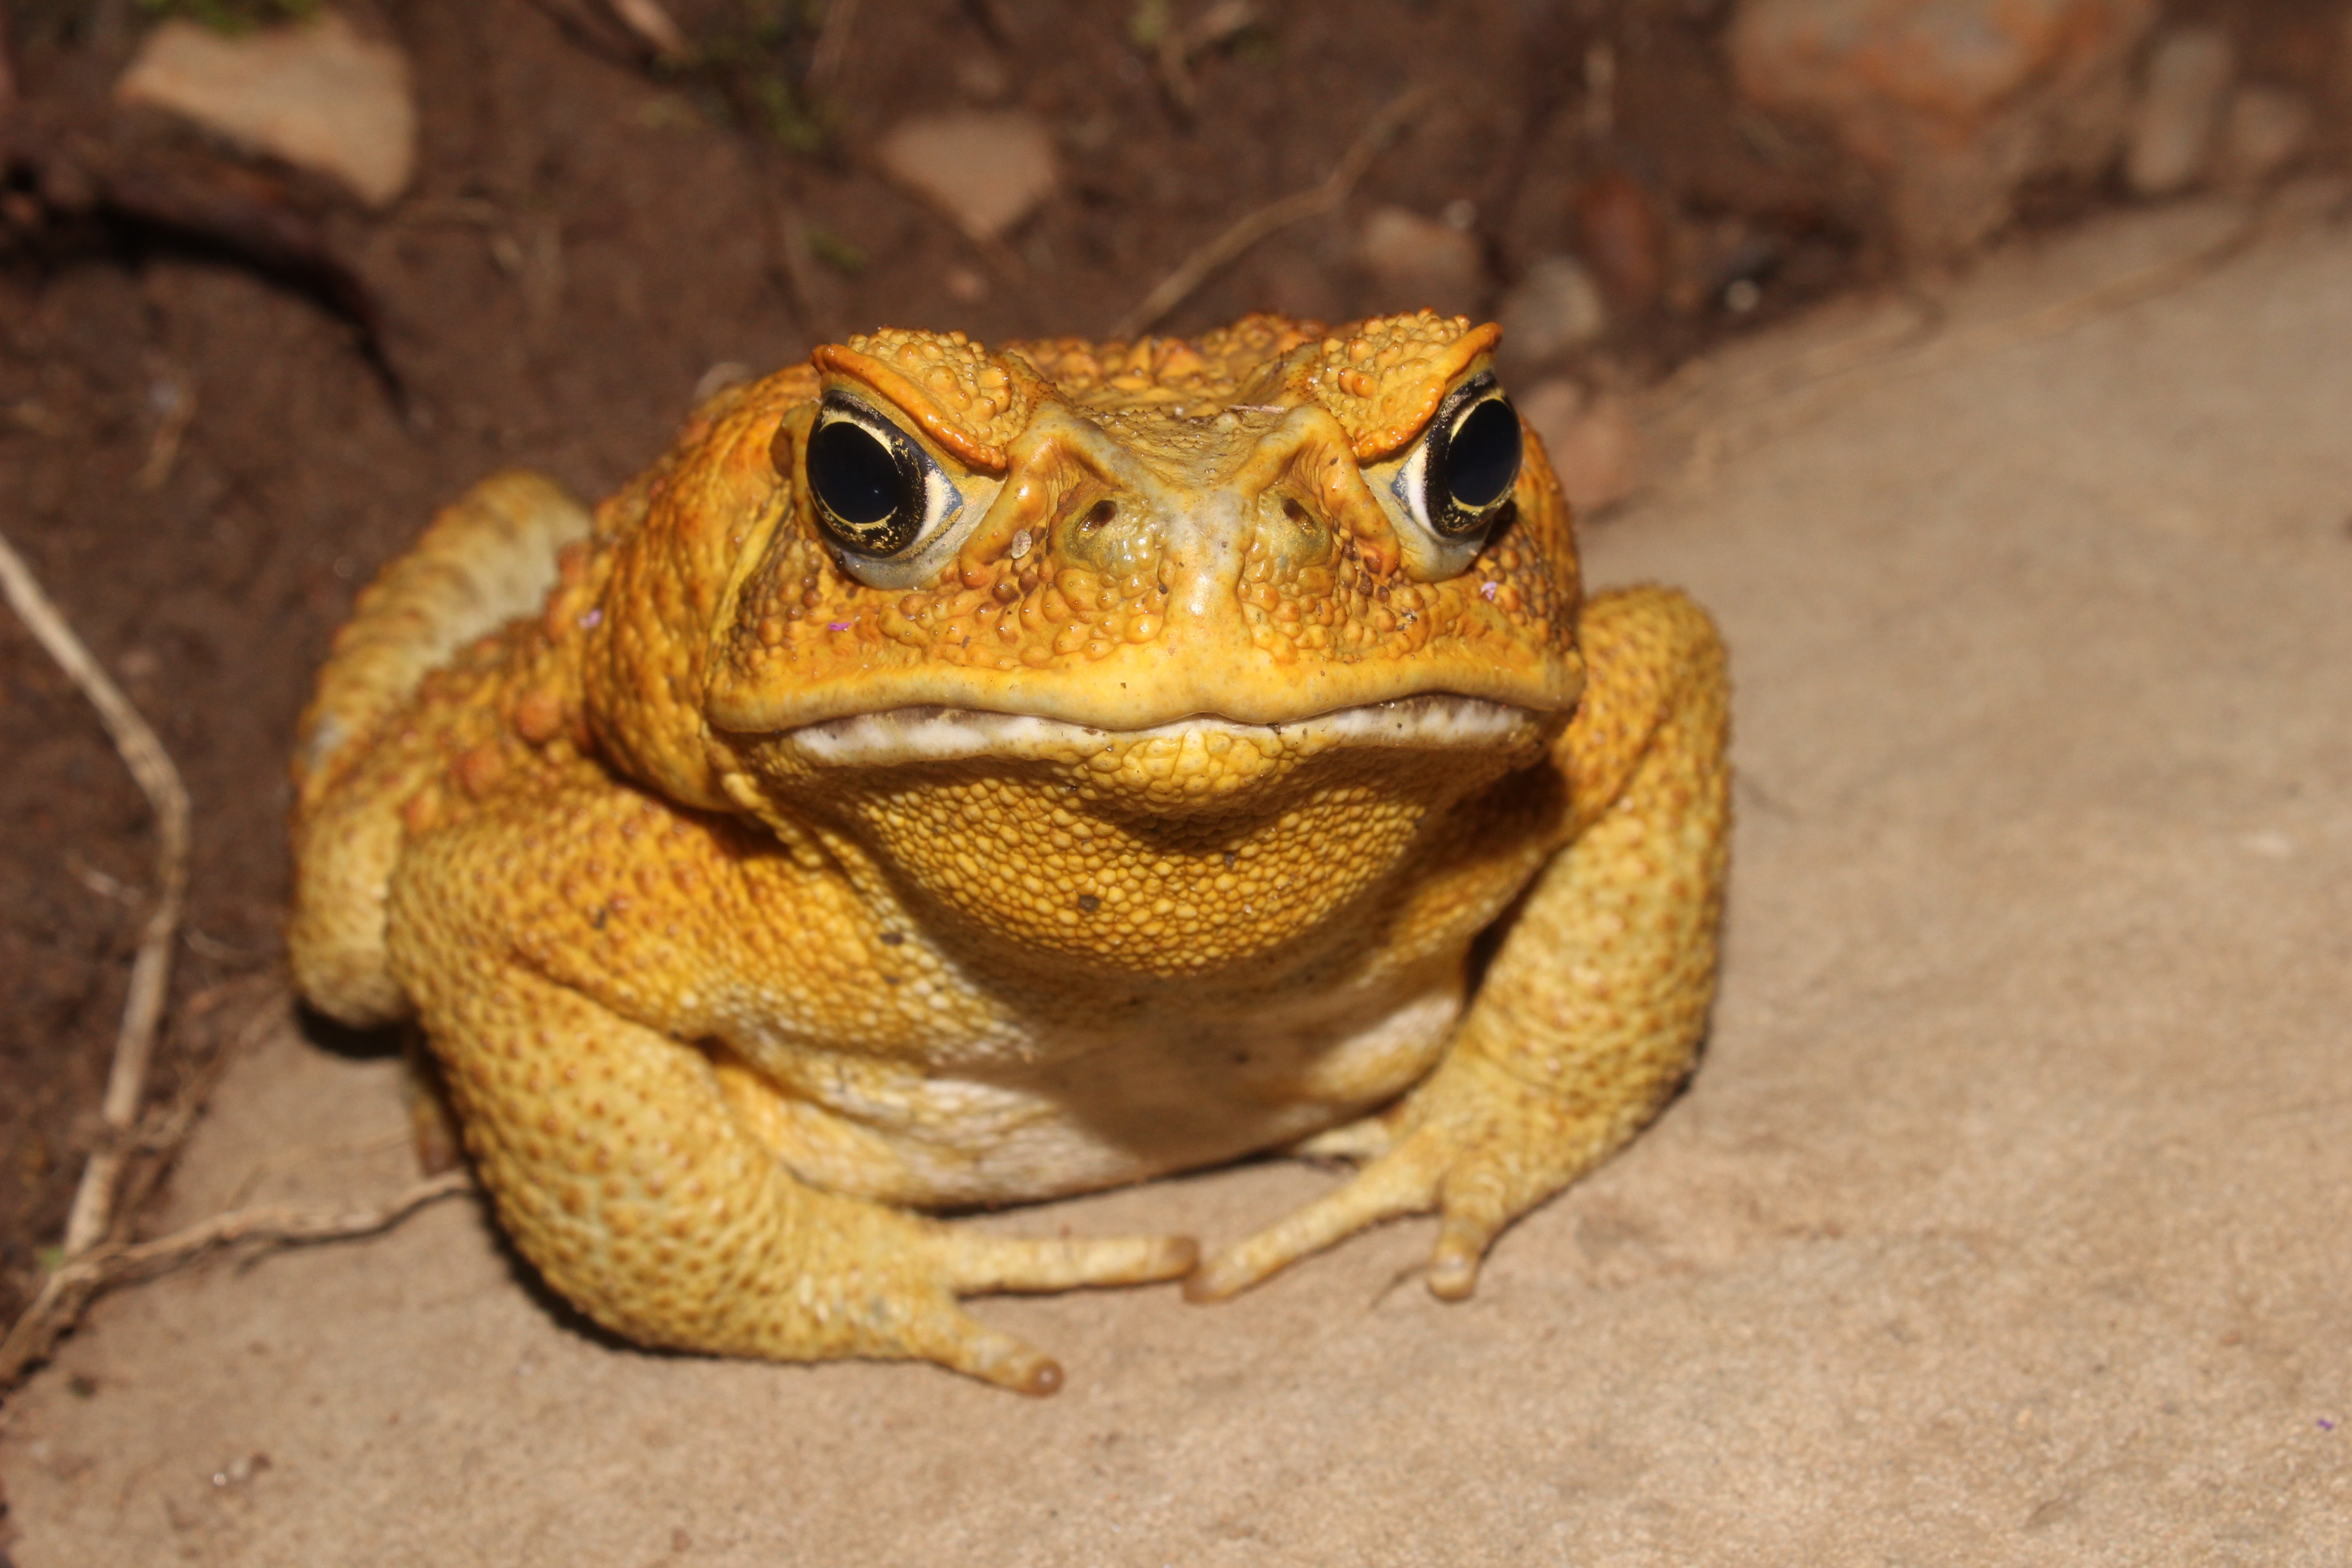 Cane Toad Biology